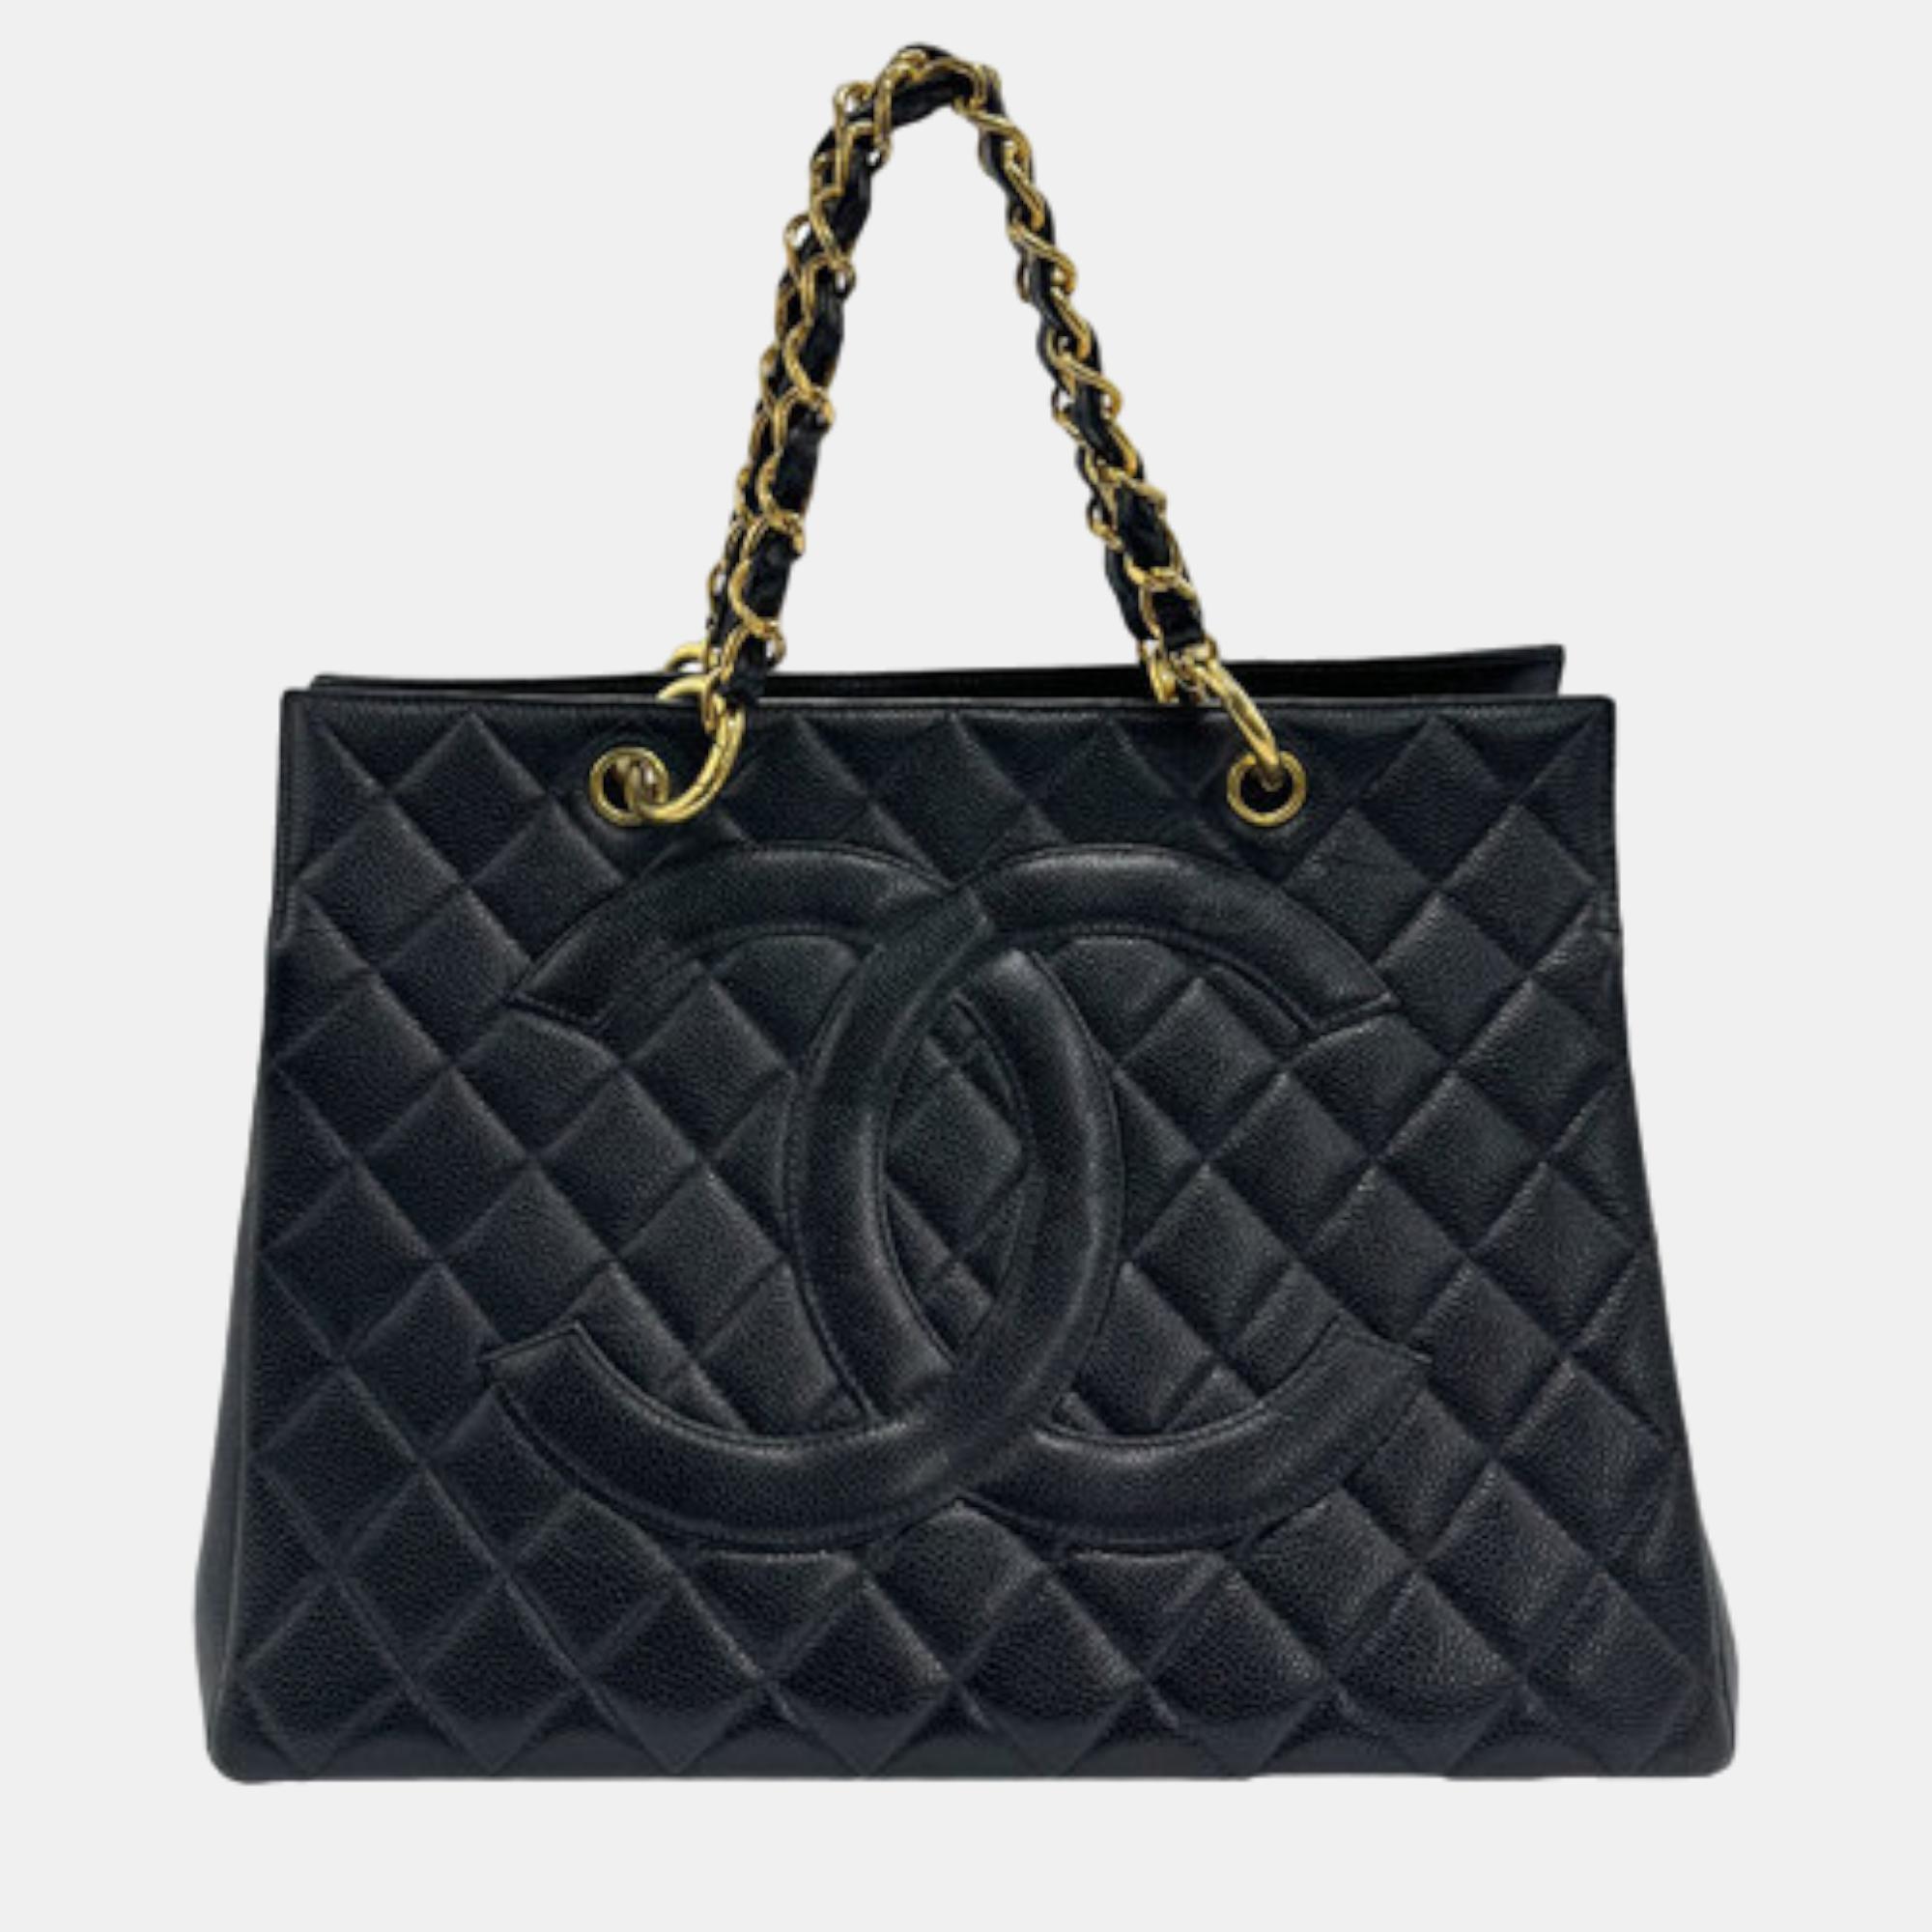 Chanel black caviar leather  gst tote bag